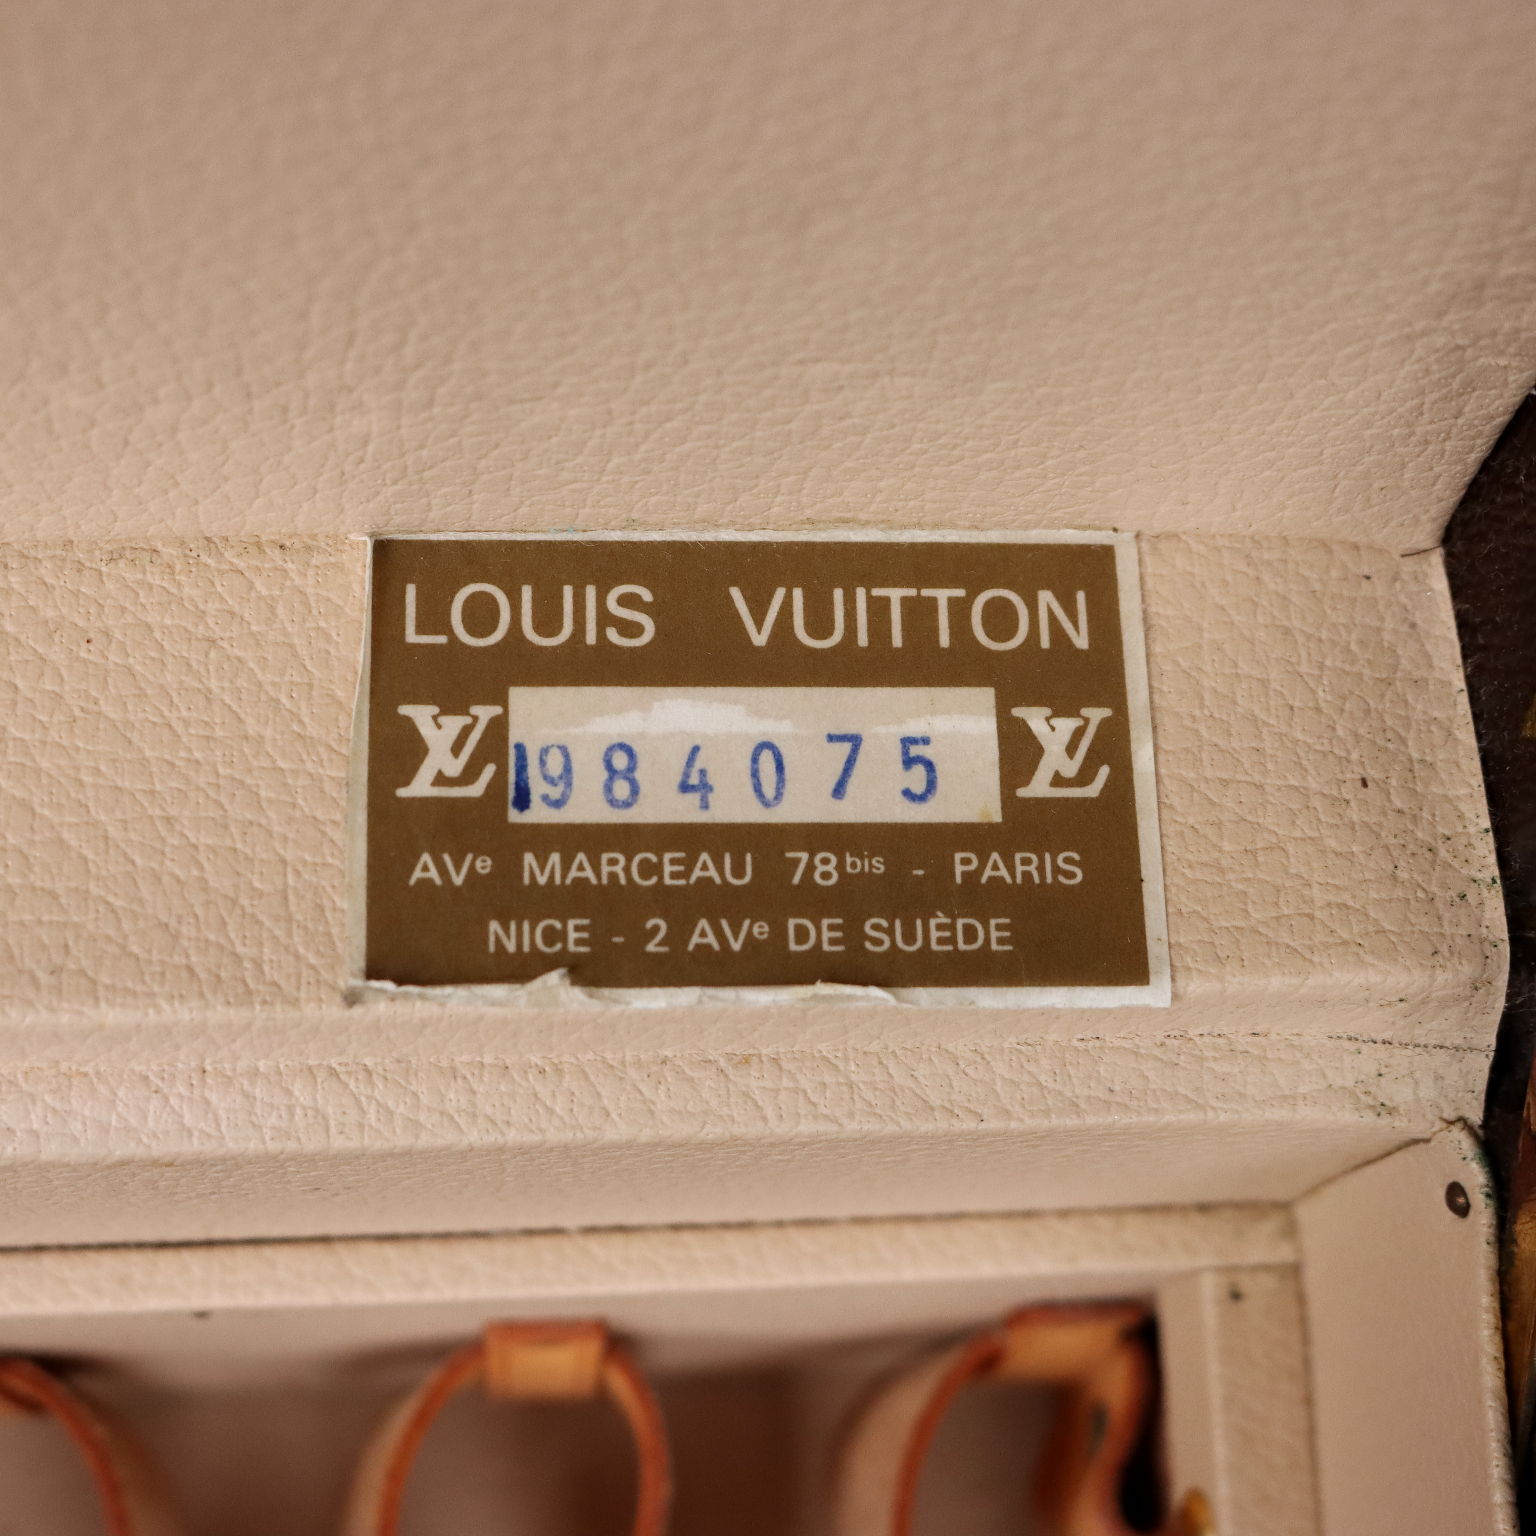 Replica Sciarpe Louis Vuitton Uomo e Donna,False foulard LV Outlet